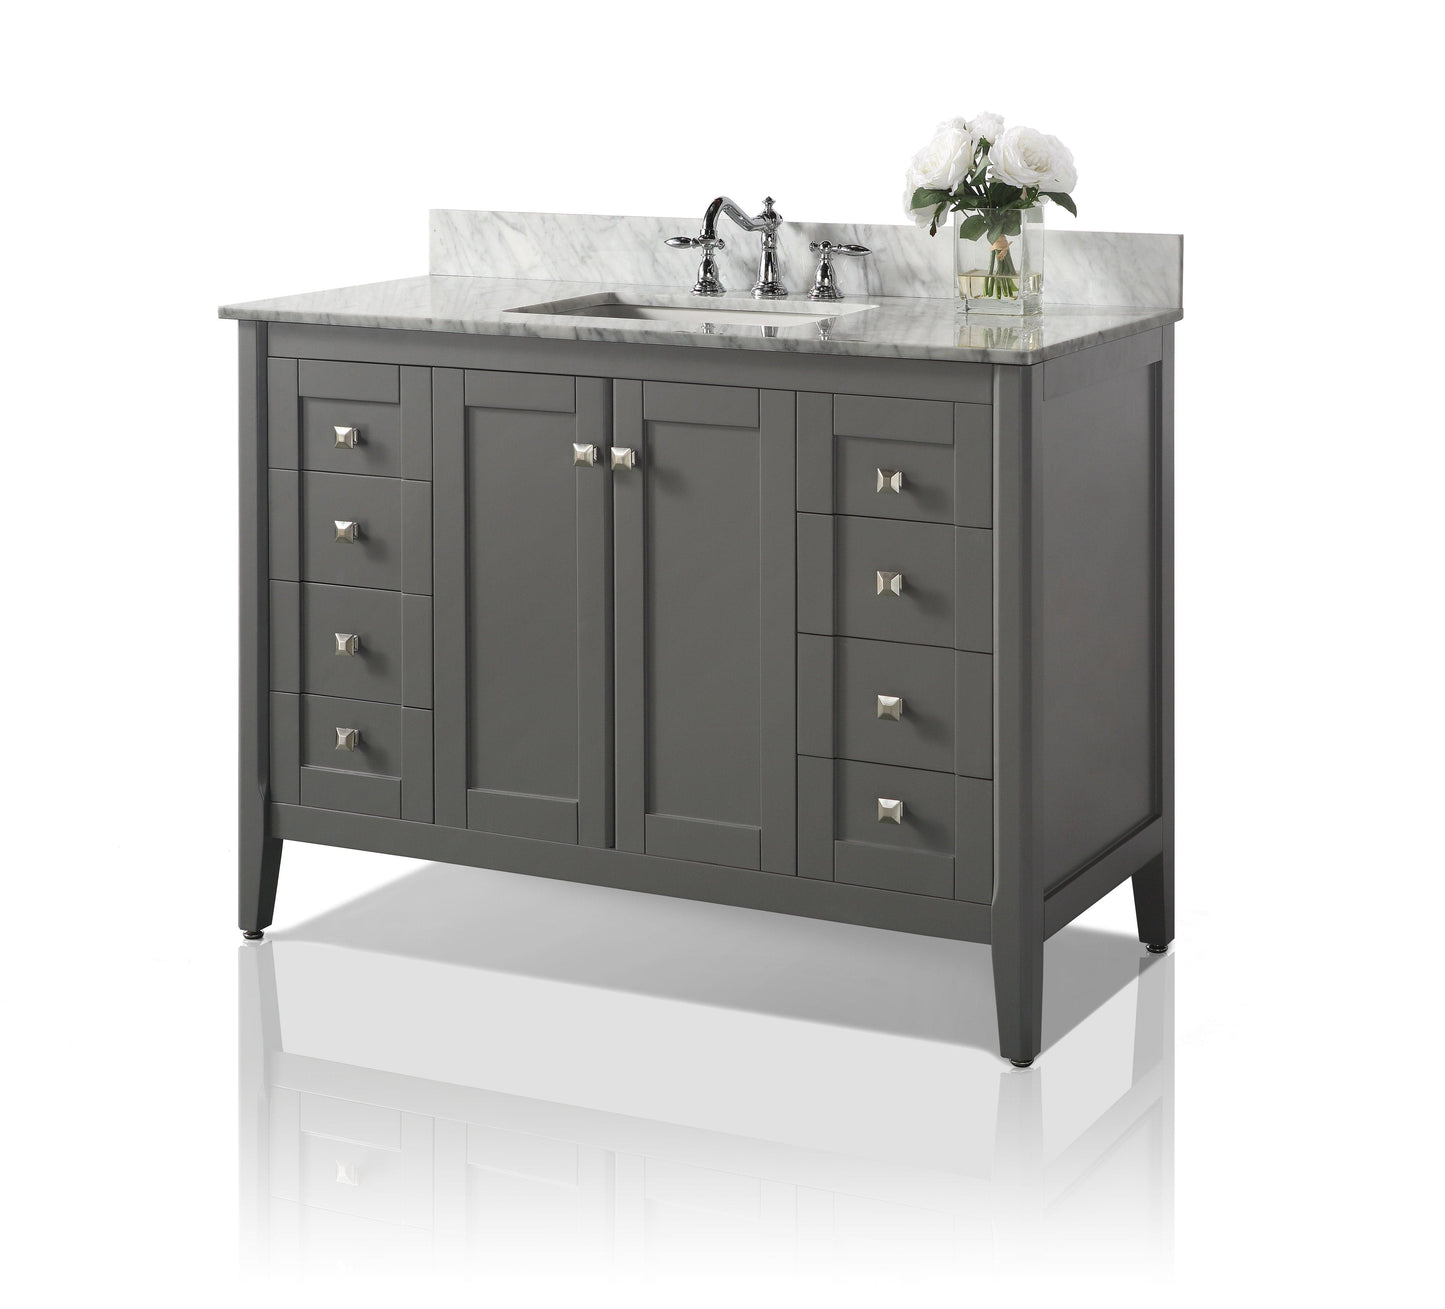 Ancerra Designs Shelton 48 in. Bath Vanity Set in Sapphire Gray with 28 in. Mirror